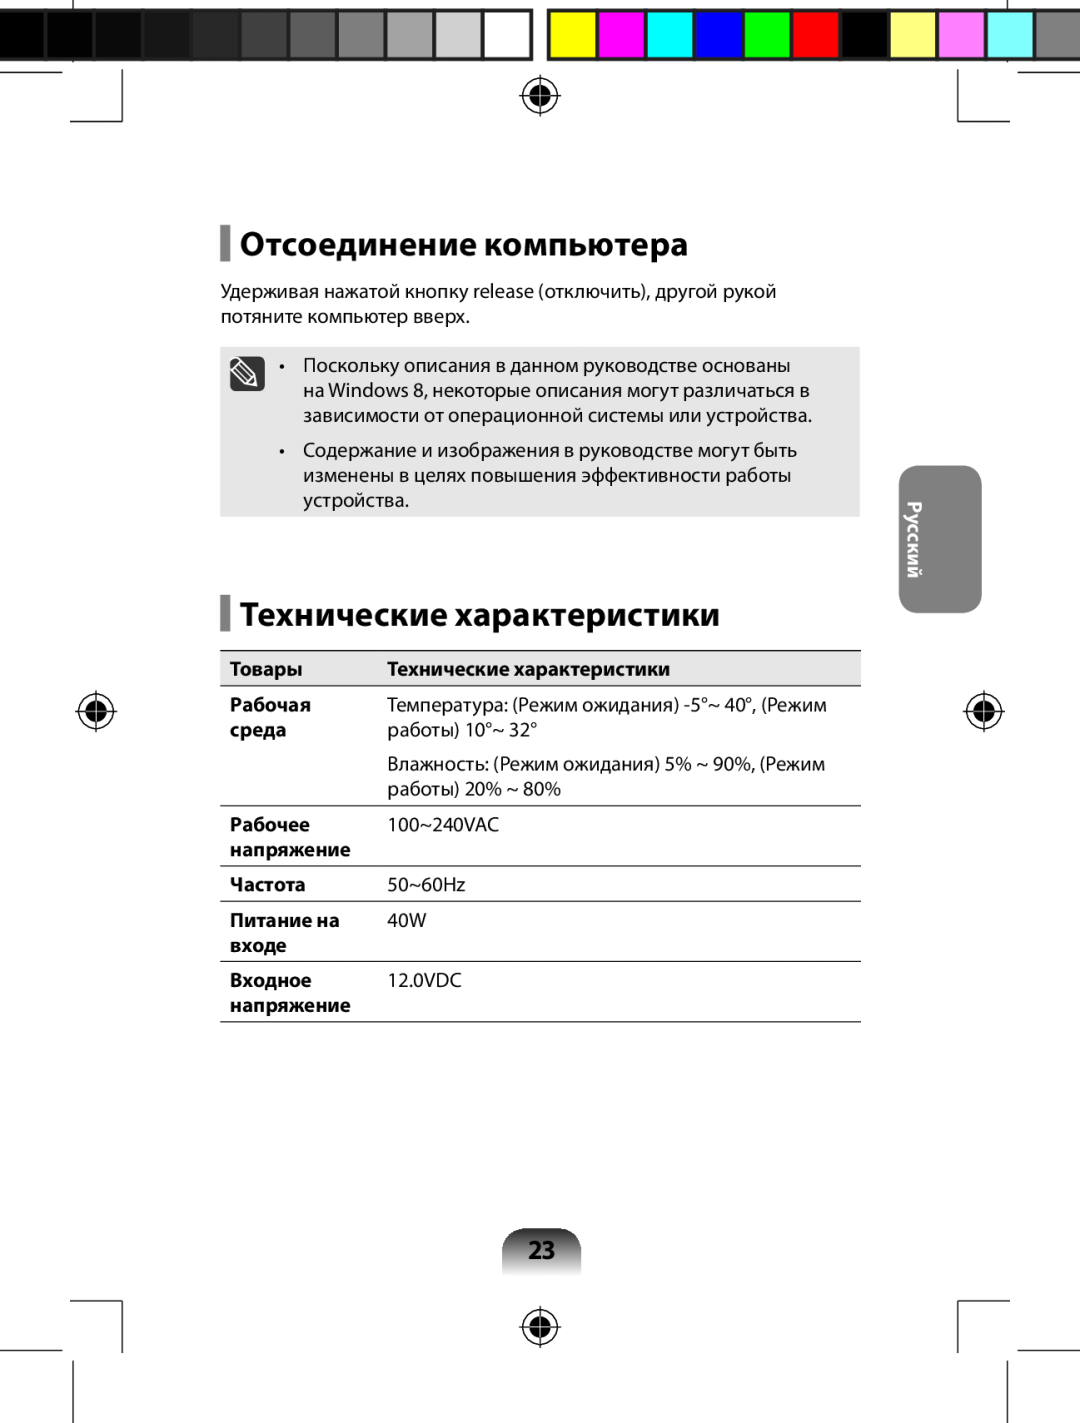 Samsung AA-RD7NMKD/US, AARD7NSDOUS manual Отсоединение компьютера, Технические характеристики, Русский 